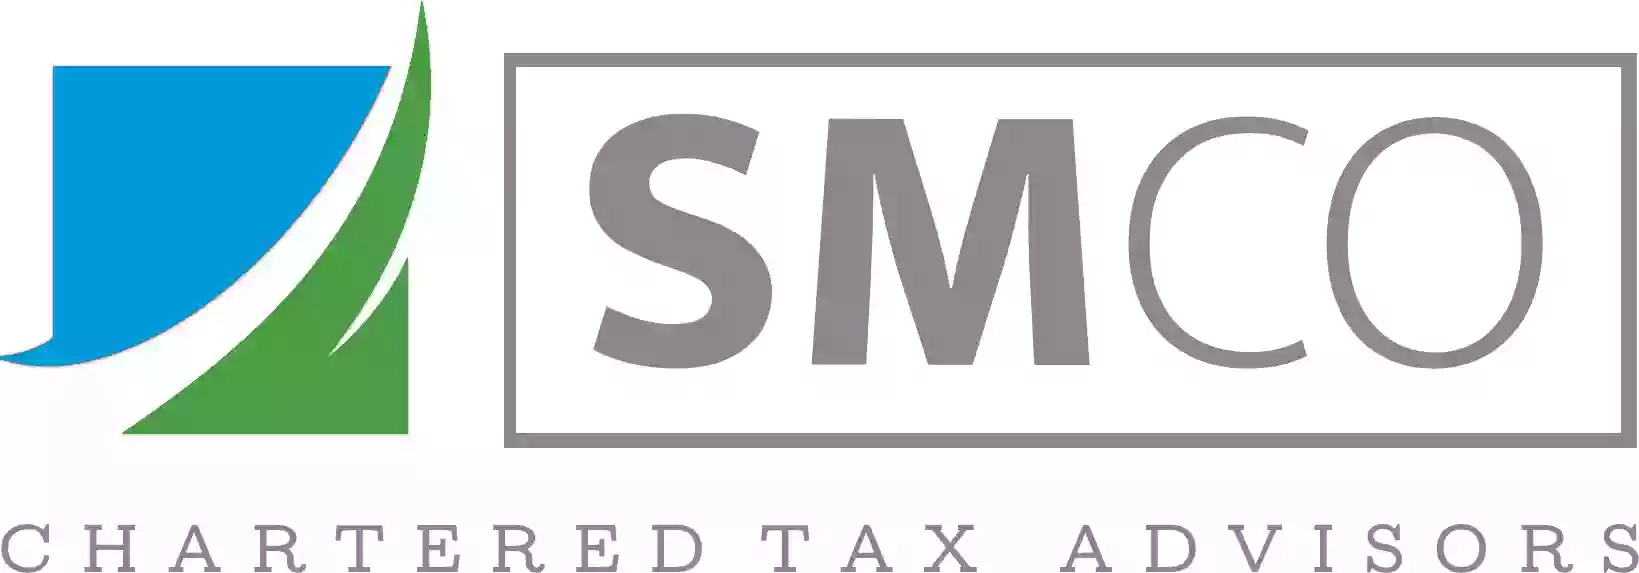 SMCO Tax - Chartered Tax Advisors